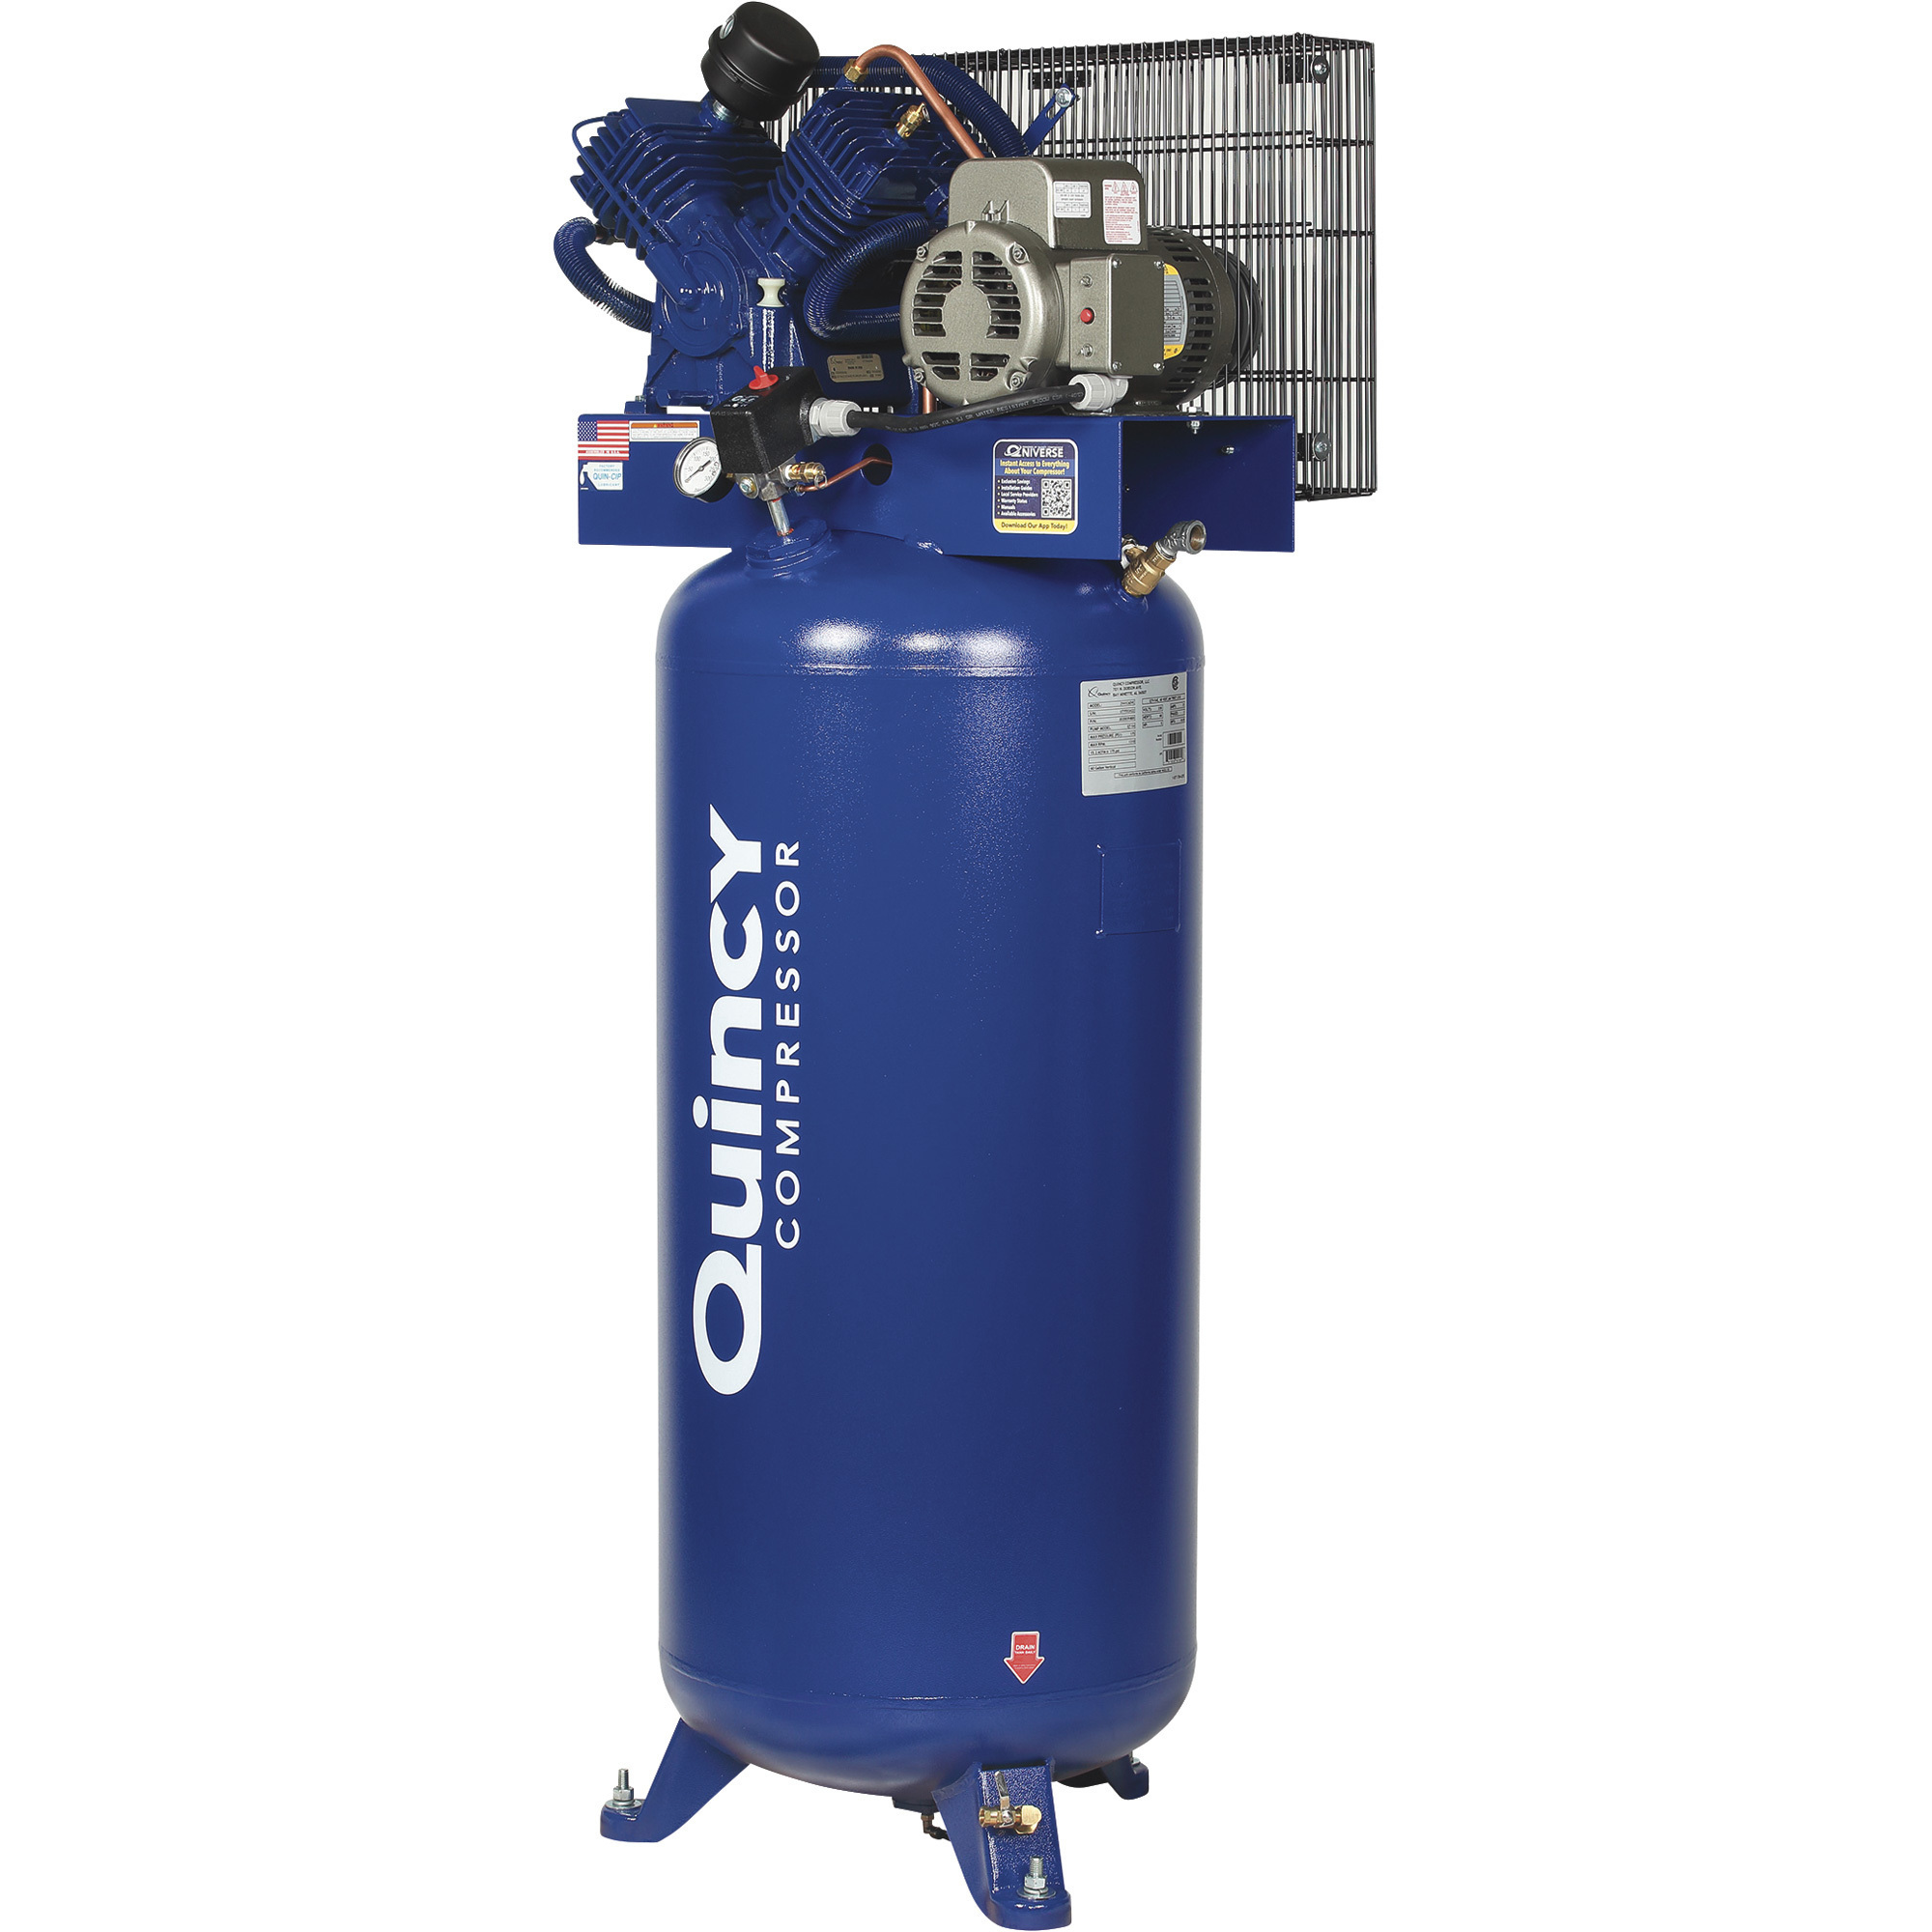 CAUSA Portable Reciprocating Air Compressor - 5HP